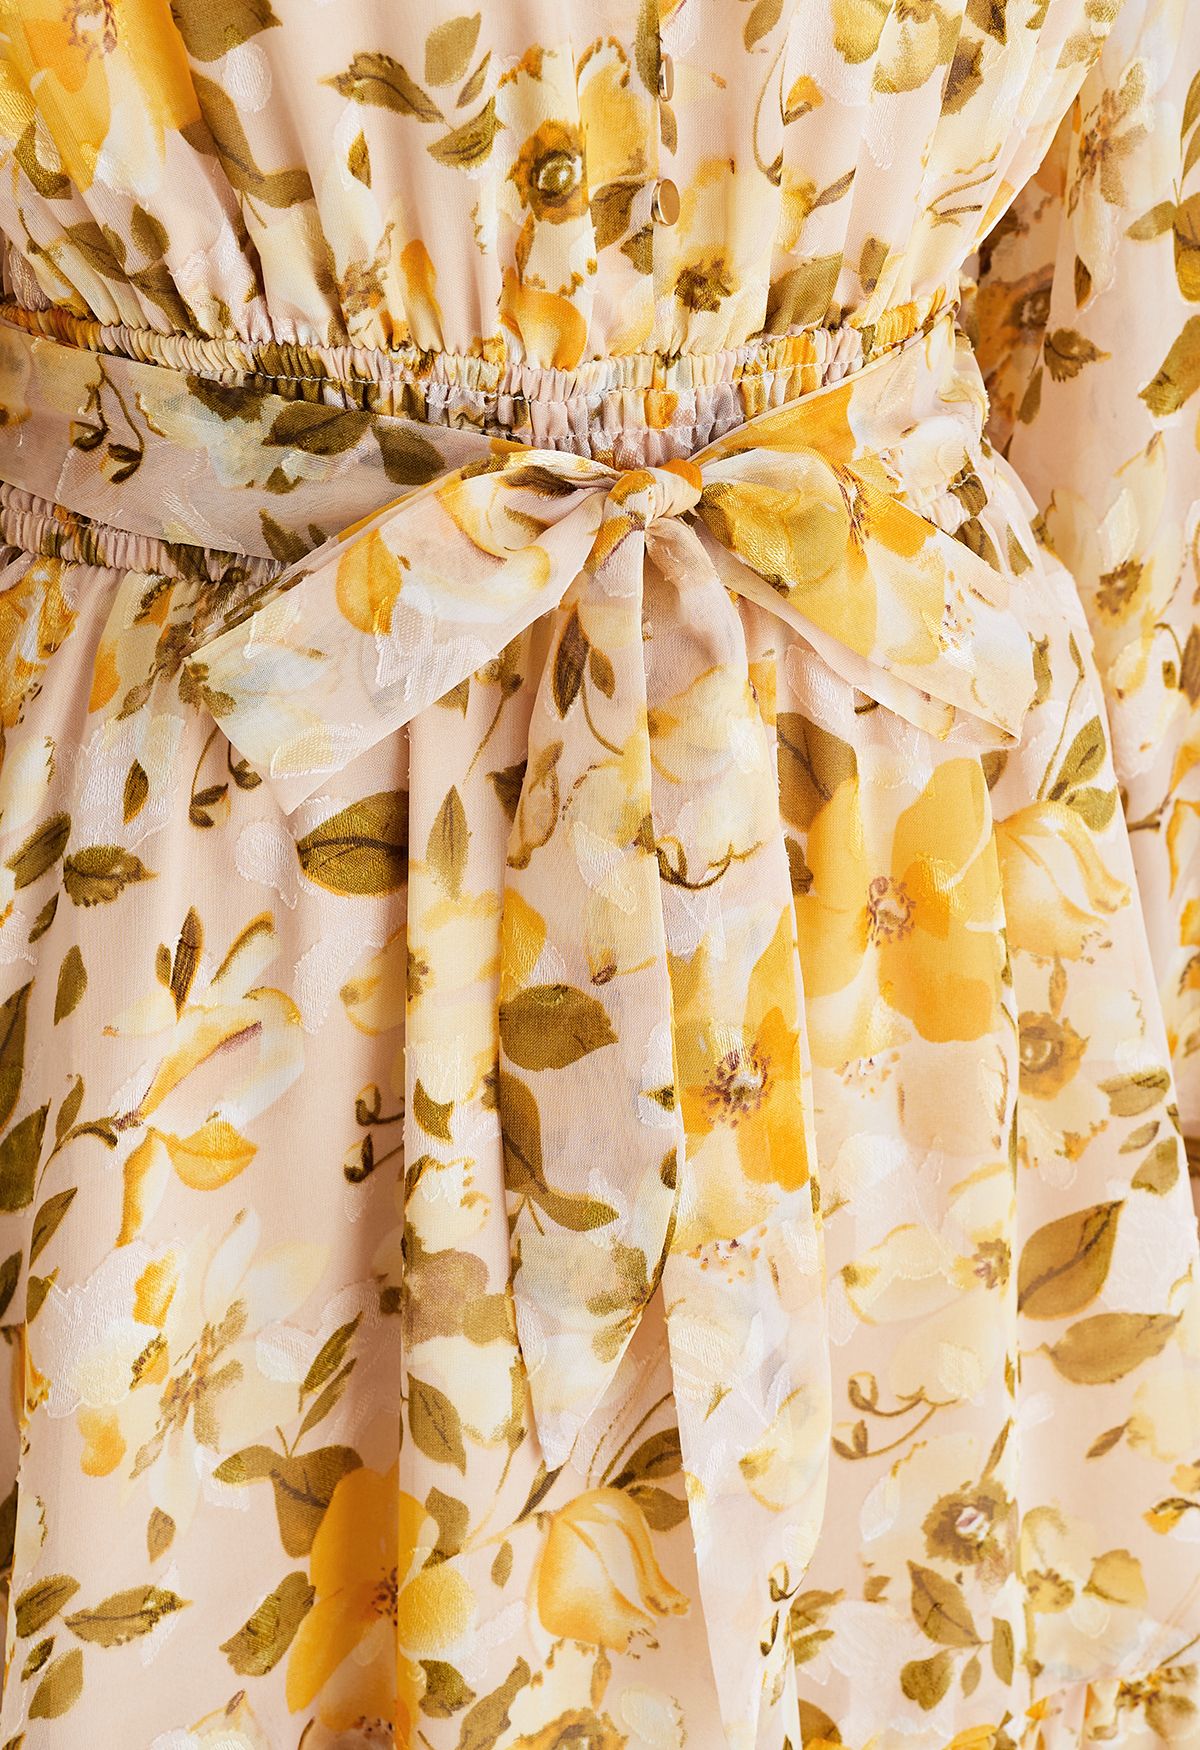 Floral Jacquard Ruffle Buttoned Chiffon Dress in Yellow